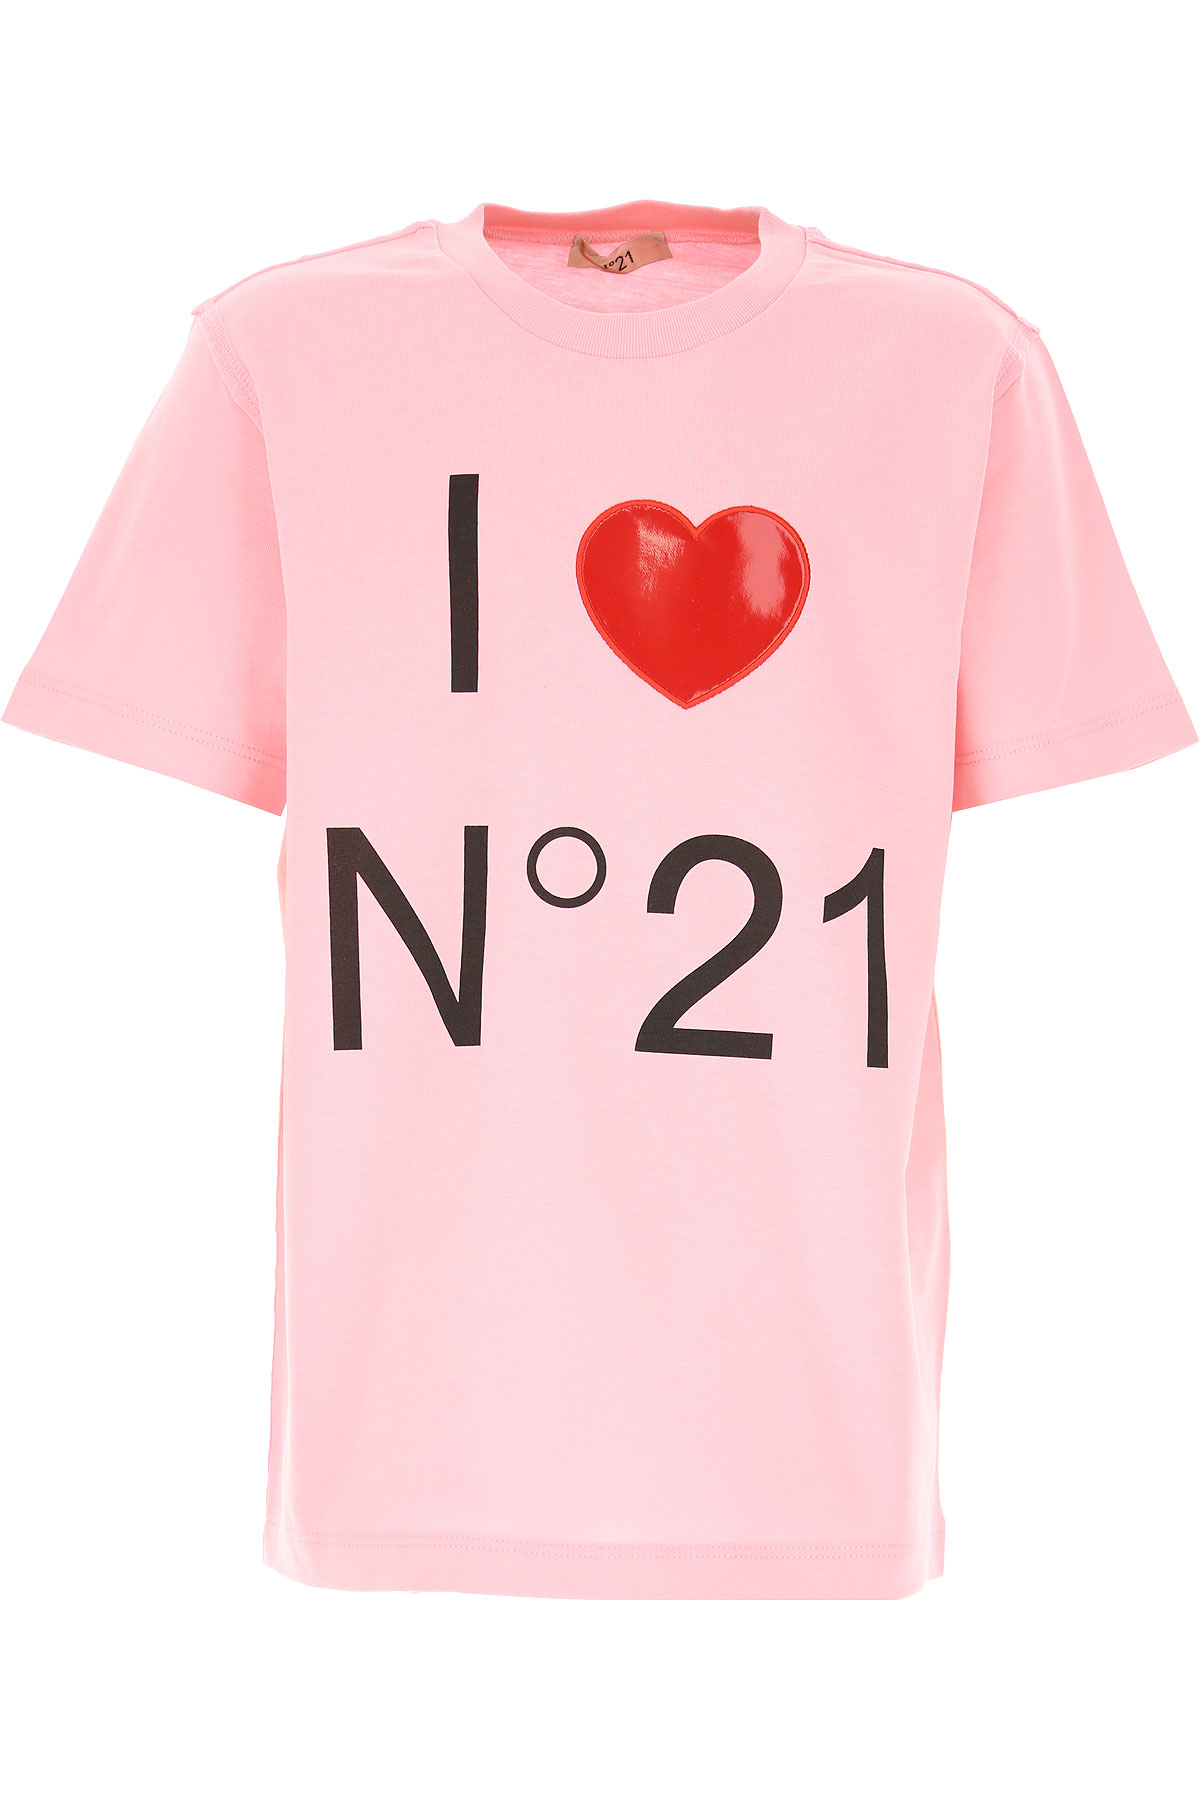 NO 21 Kinder T-Shirt für Mädchen Günstig im Sale, Baumwolle, 2017, 10Y 12Y 14Y 4Y 6Y 8Y